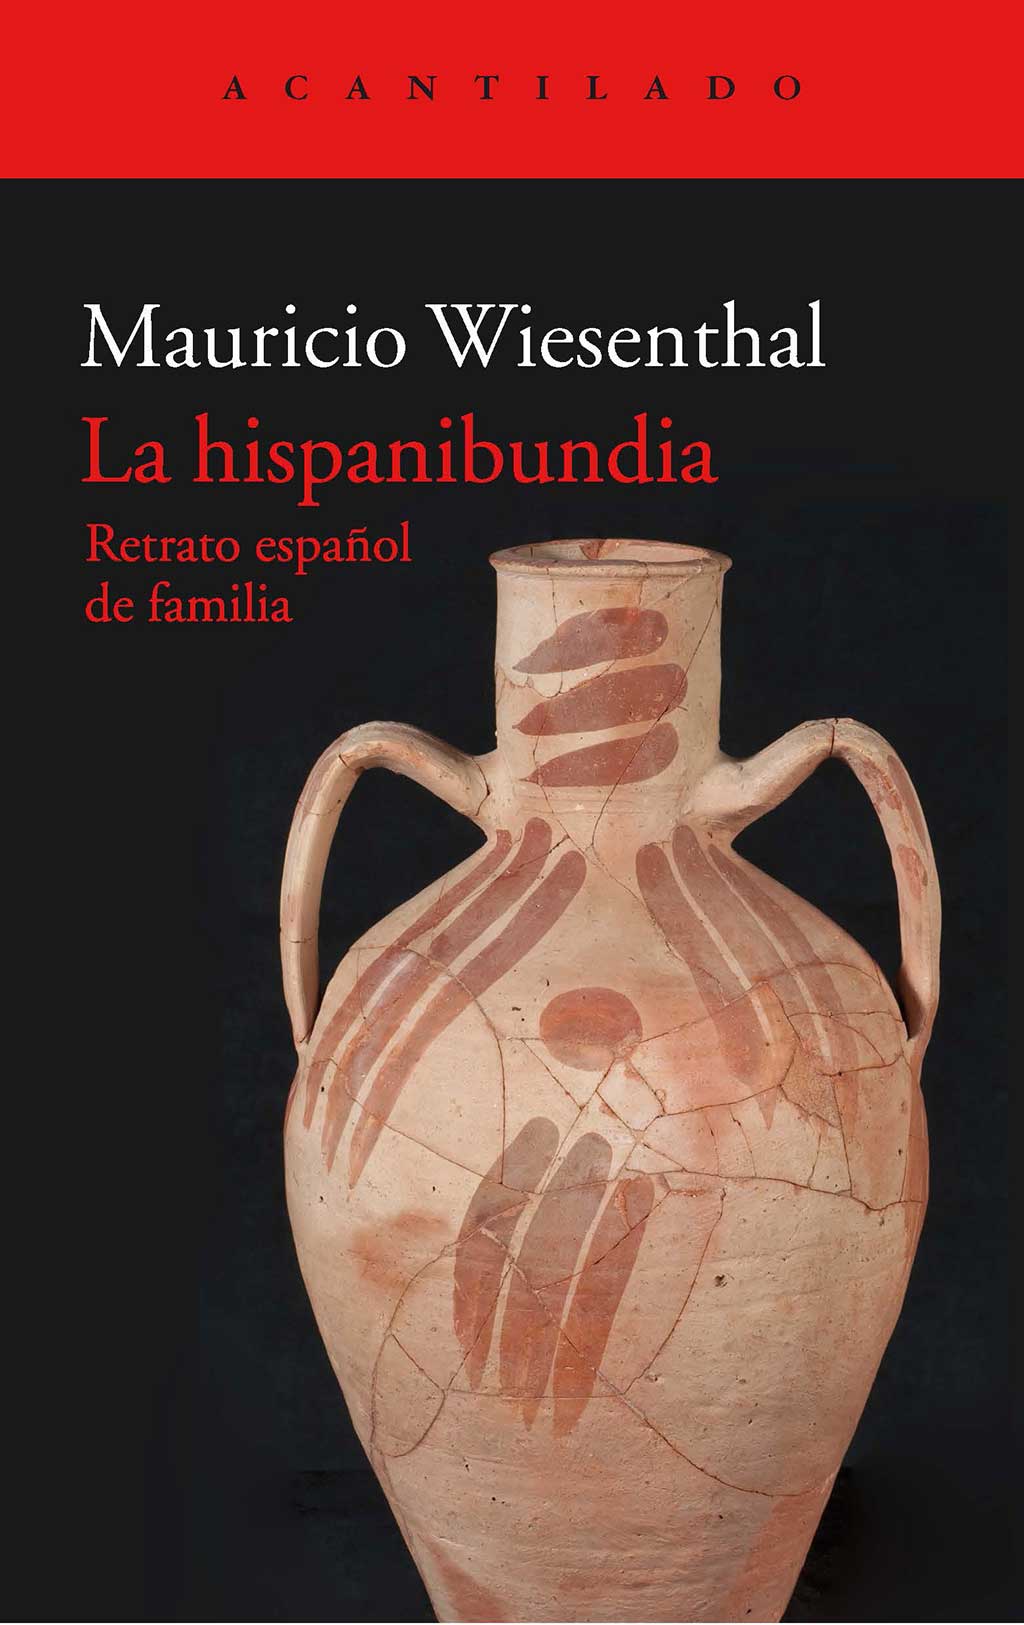 La hispanibundia. Mauricio Wiesenthal